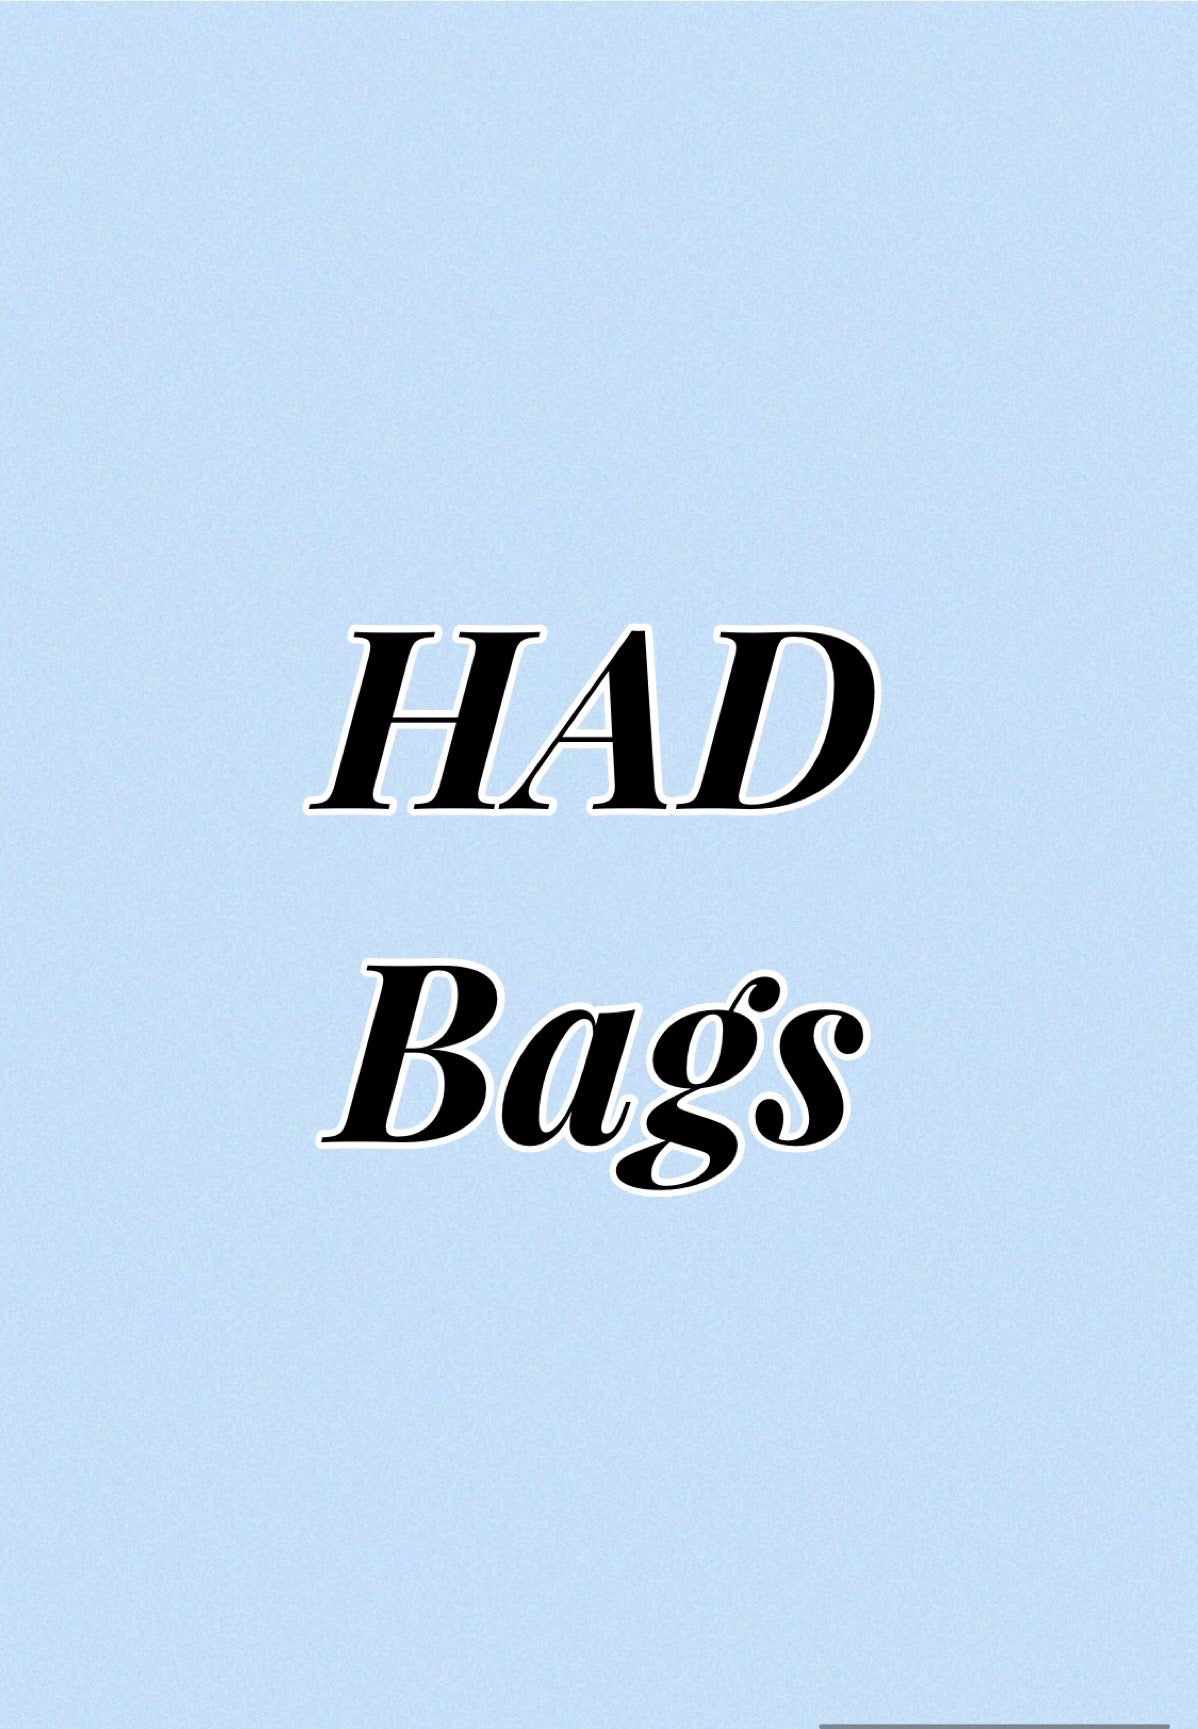 HAD bags